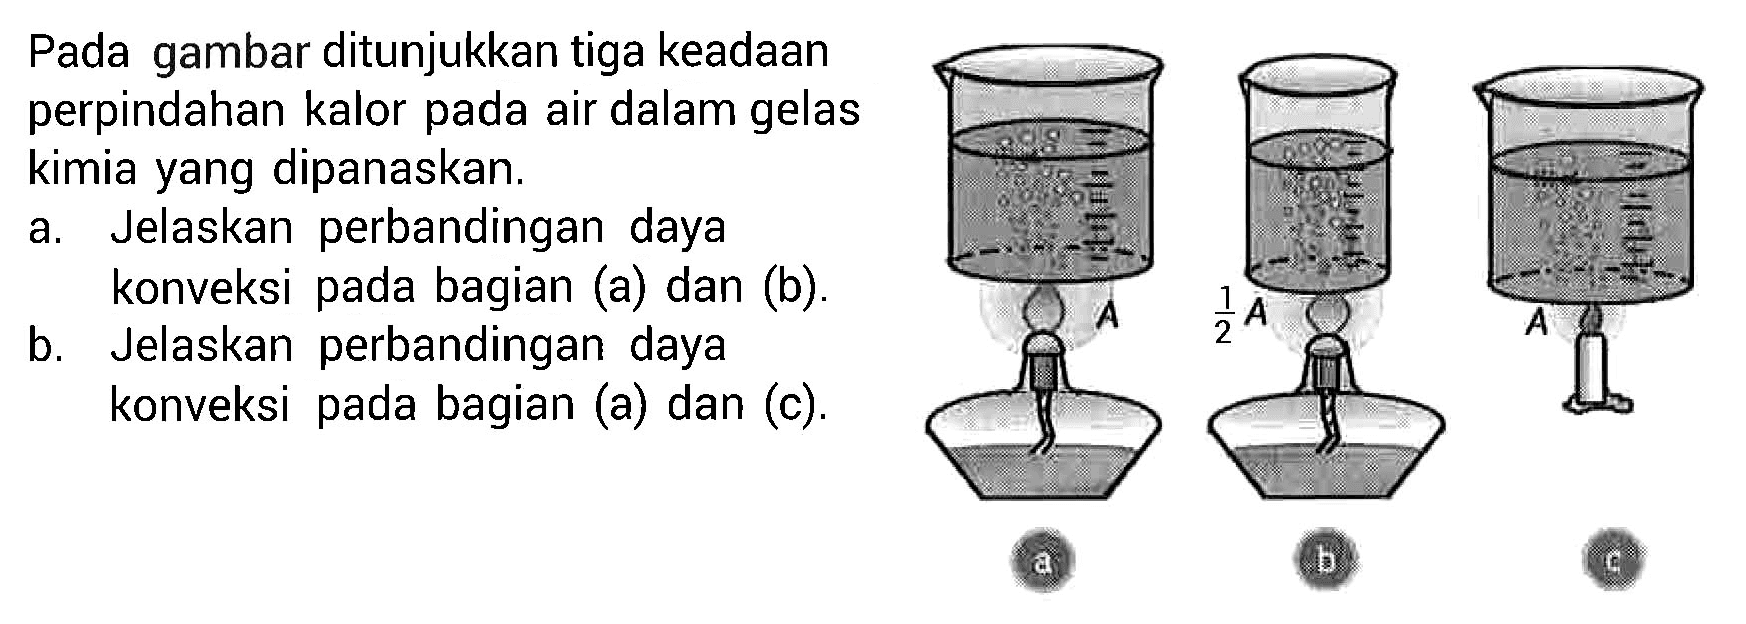 Pada gambar ditunjukkan tiga keadaan perpindahan kalor pada air dalam gelas kimia yang dipanaskan. a. Jelaskan perbandingan daya konveksi pada bagian (a) dan (b). b. Jelaskan perbandingan daya konveksi pada bagian (a) dan (c). A a 1/2 A b A c